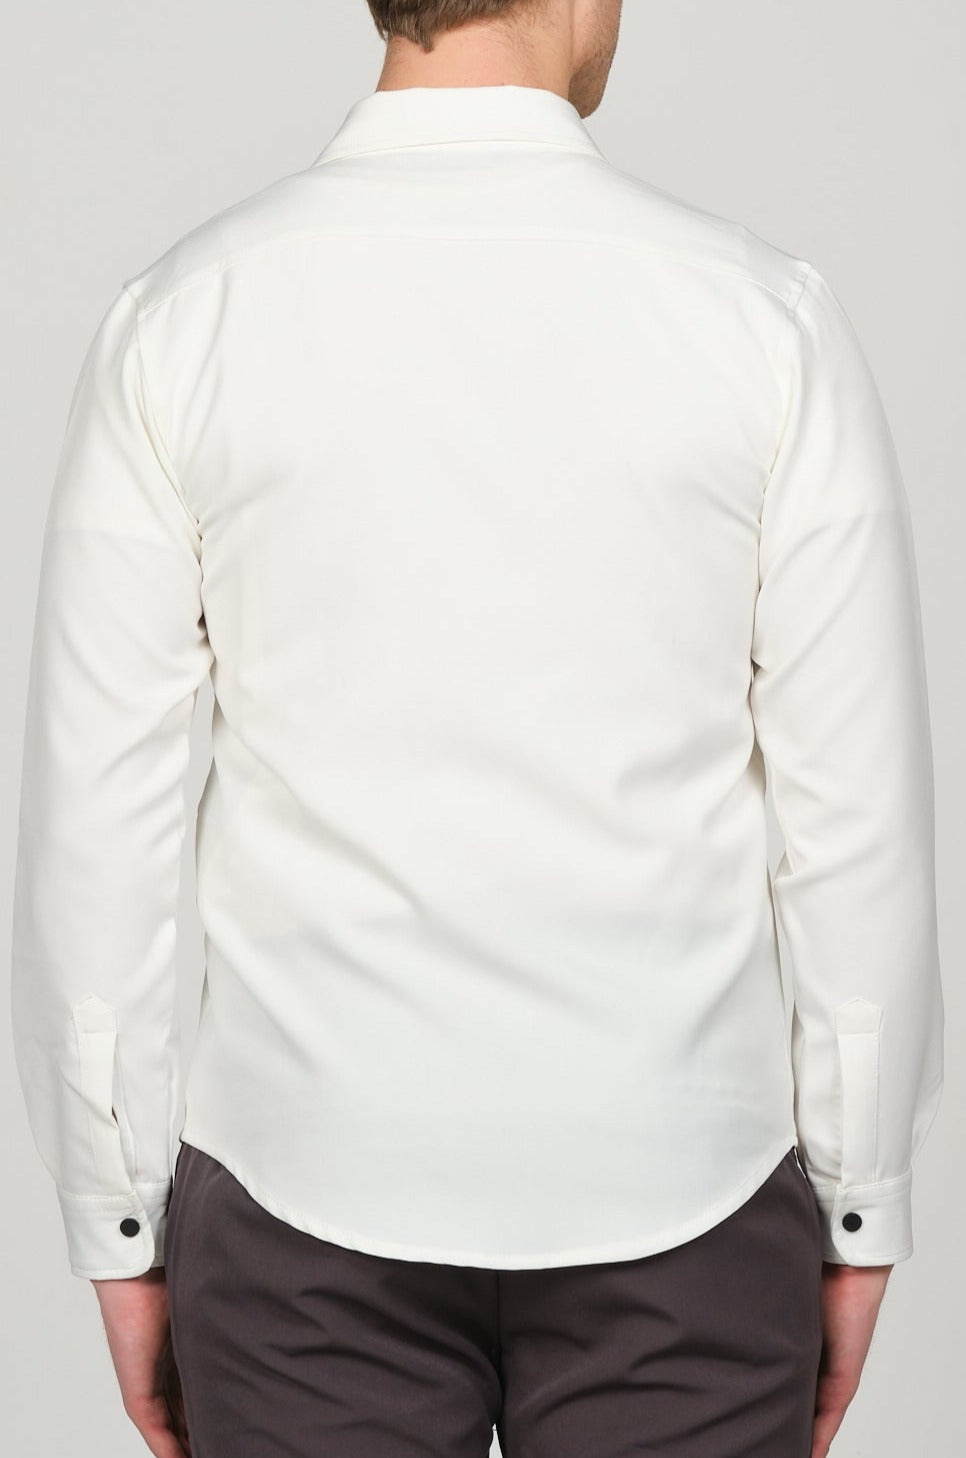 4910-white Overshirt - Ron Tomson